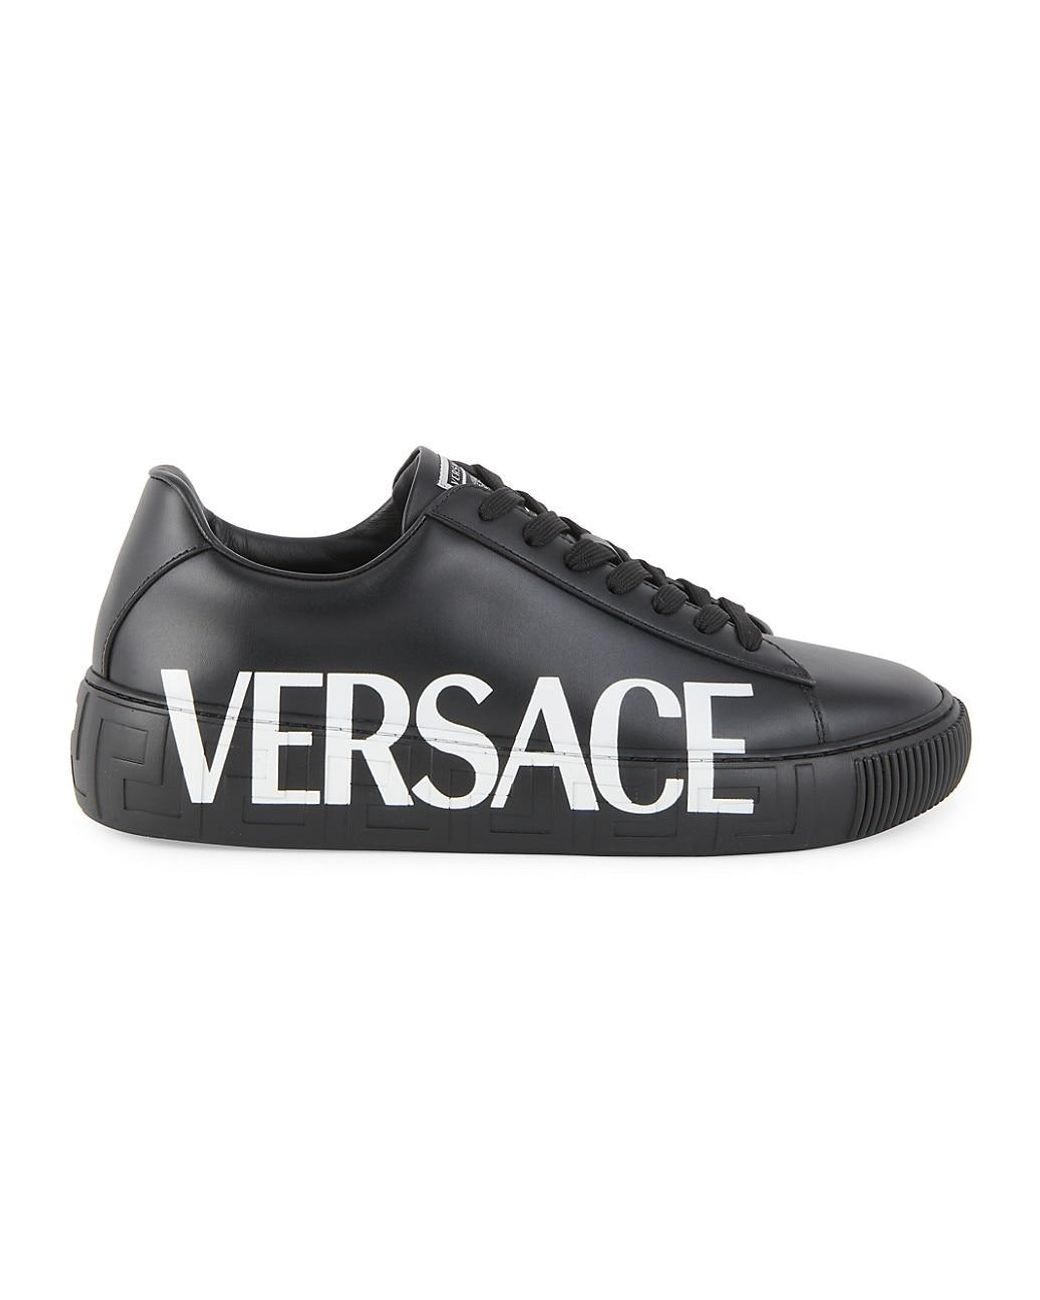 Versace La Greca Logo Leather Sneakers in Black for Men - Lyst